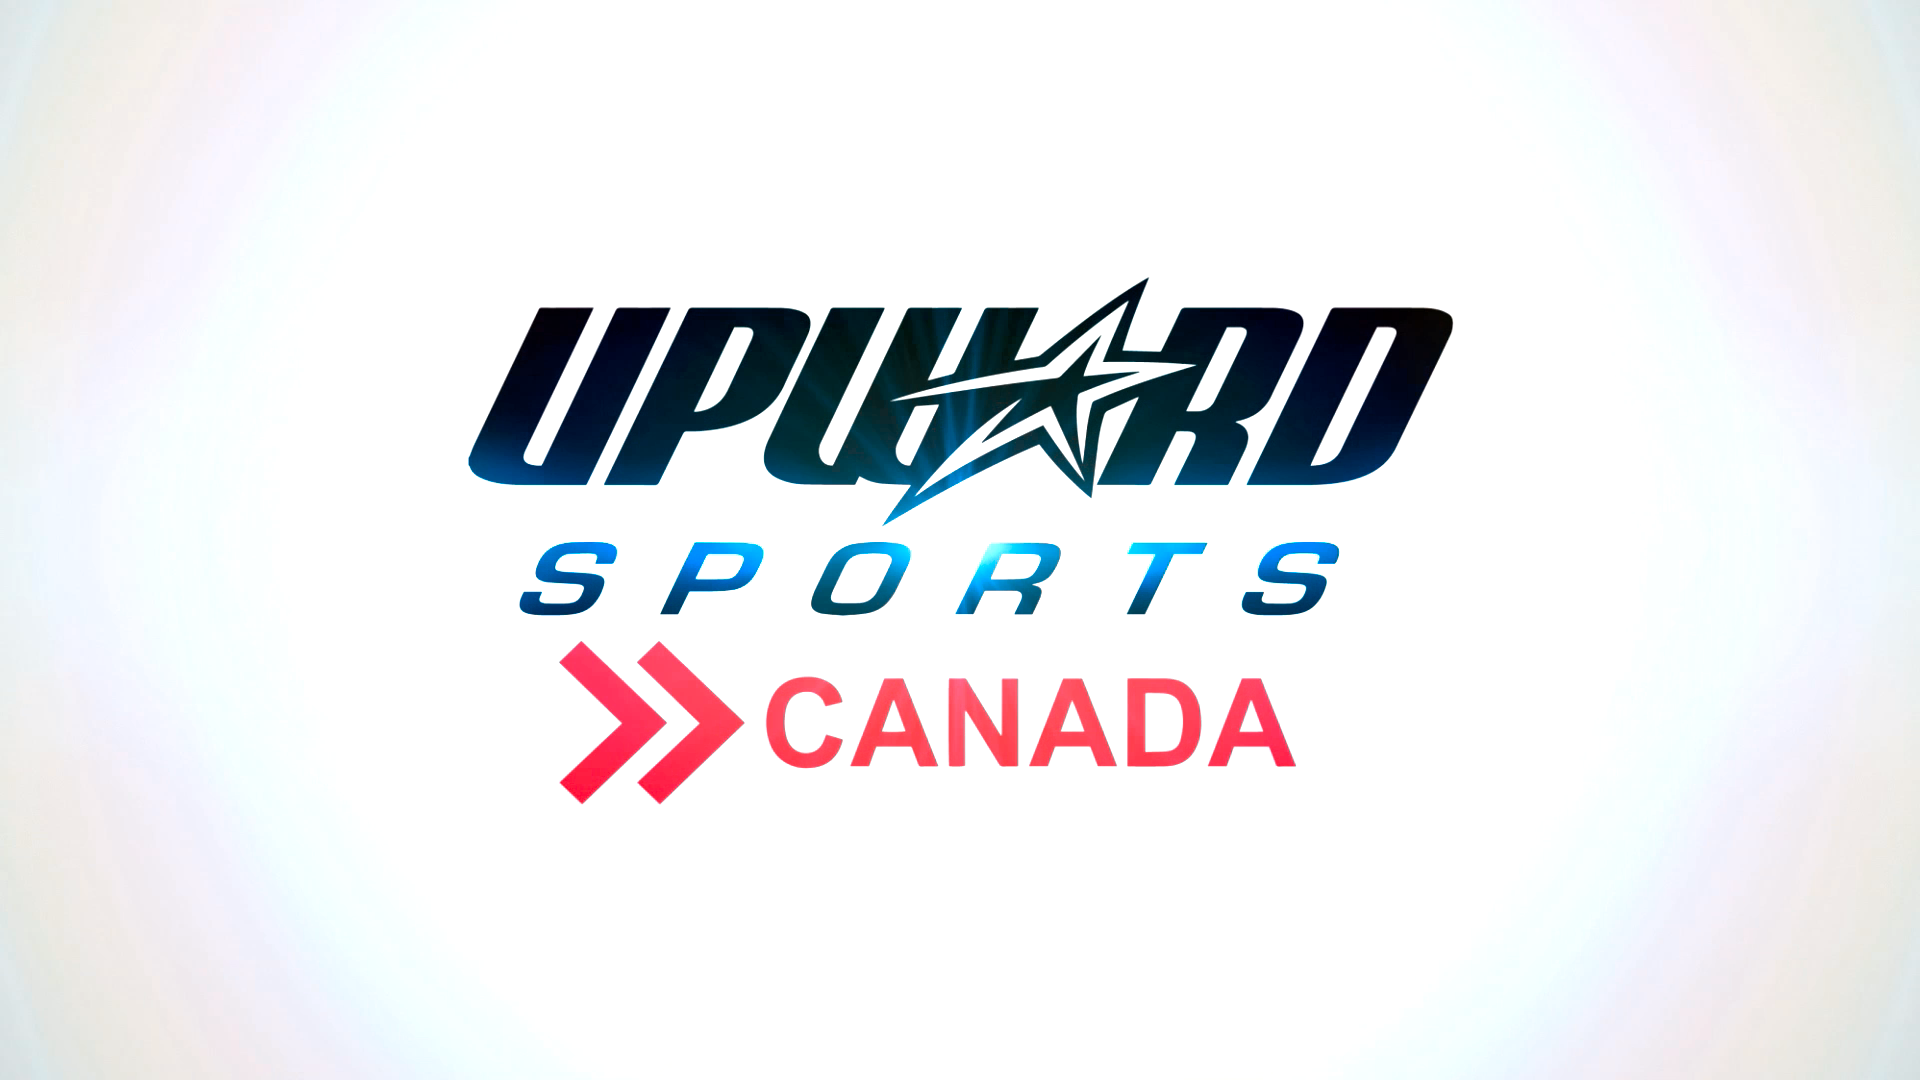 Upward Sports Promotional Video